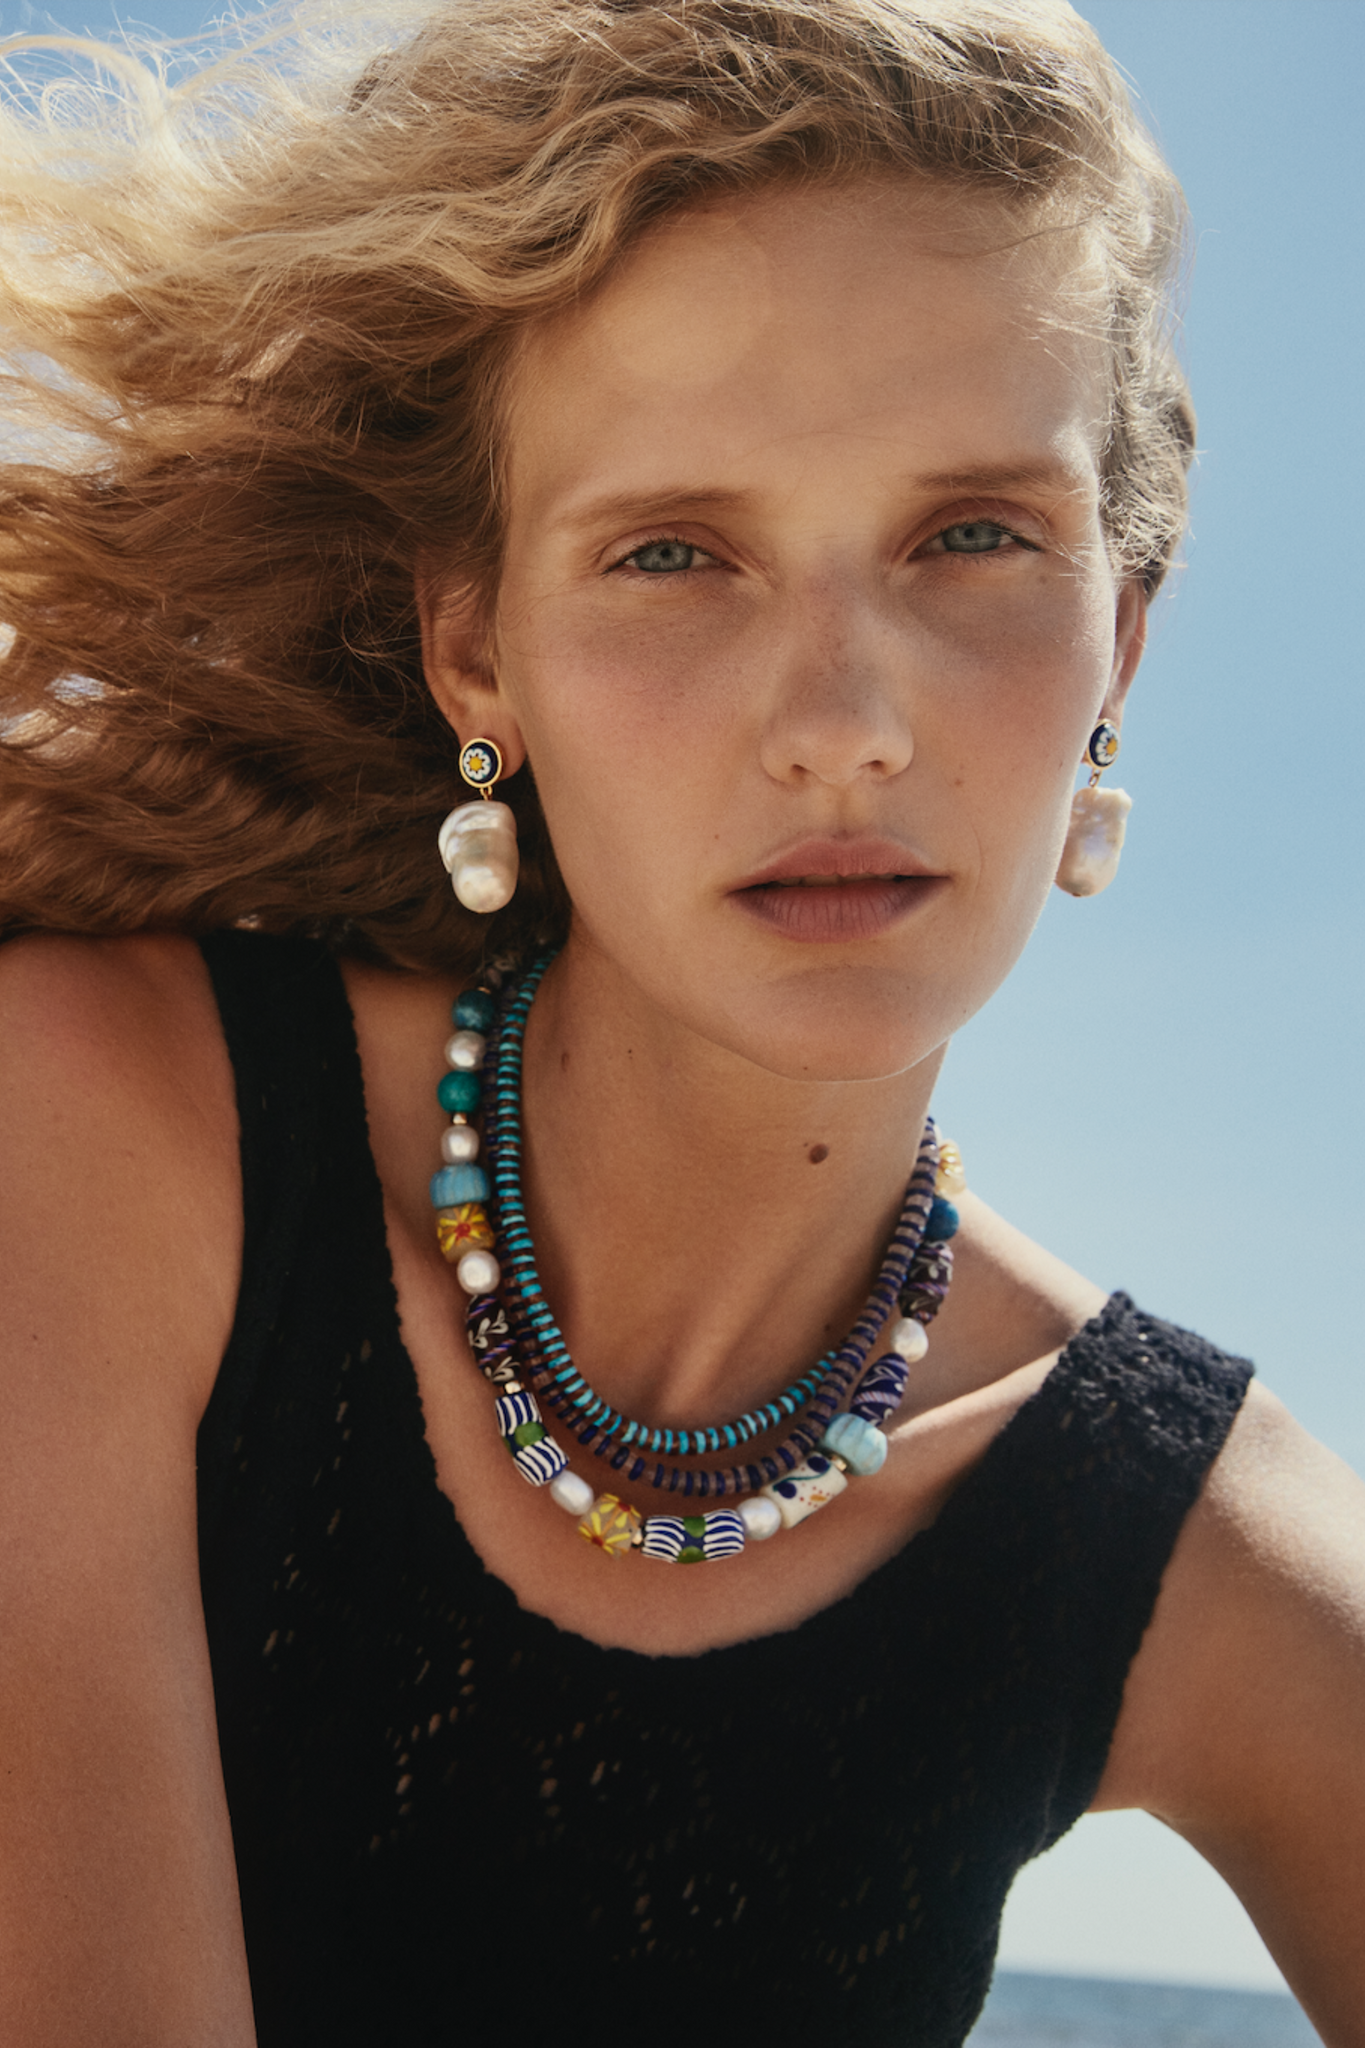 Lizzie Fortunato Jewels - Souvenir Necklace, Multi